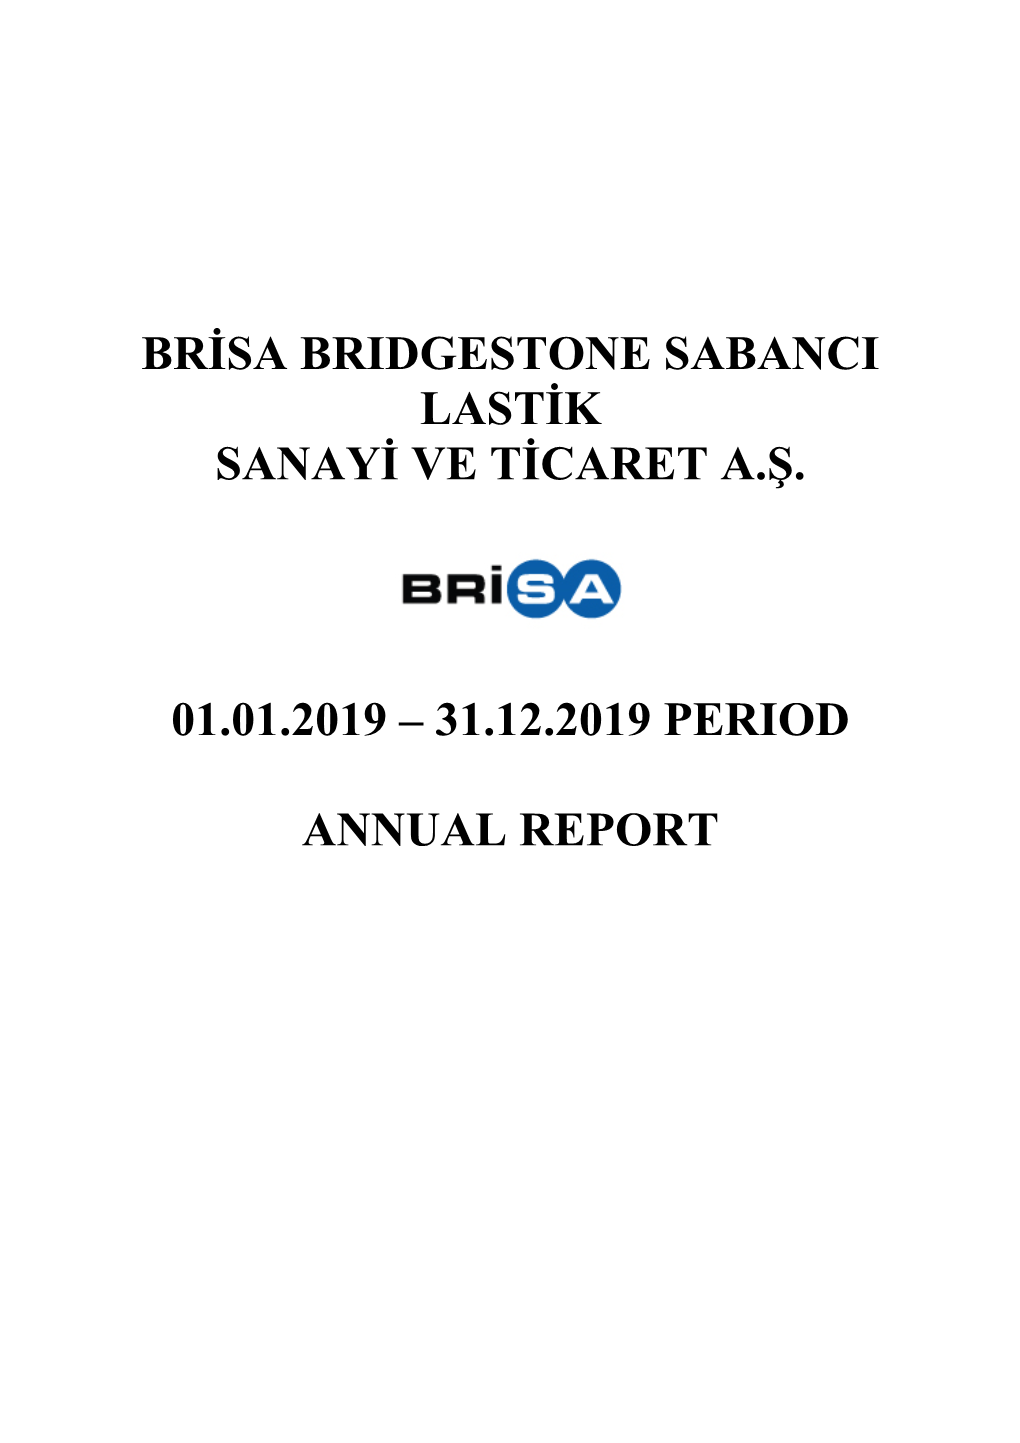 Brisa Bridgestone Sabanci Lastik Sanayi Ve Ticaret A.Ş